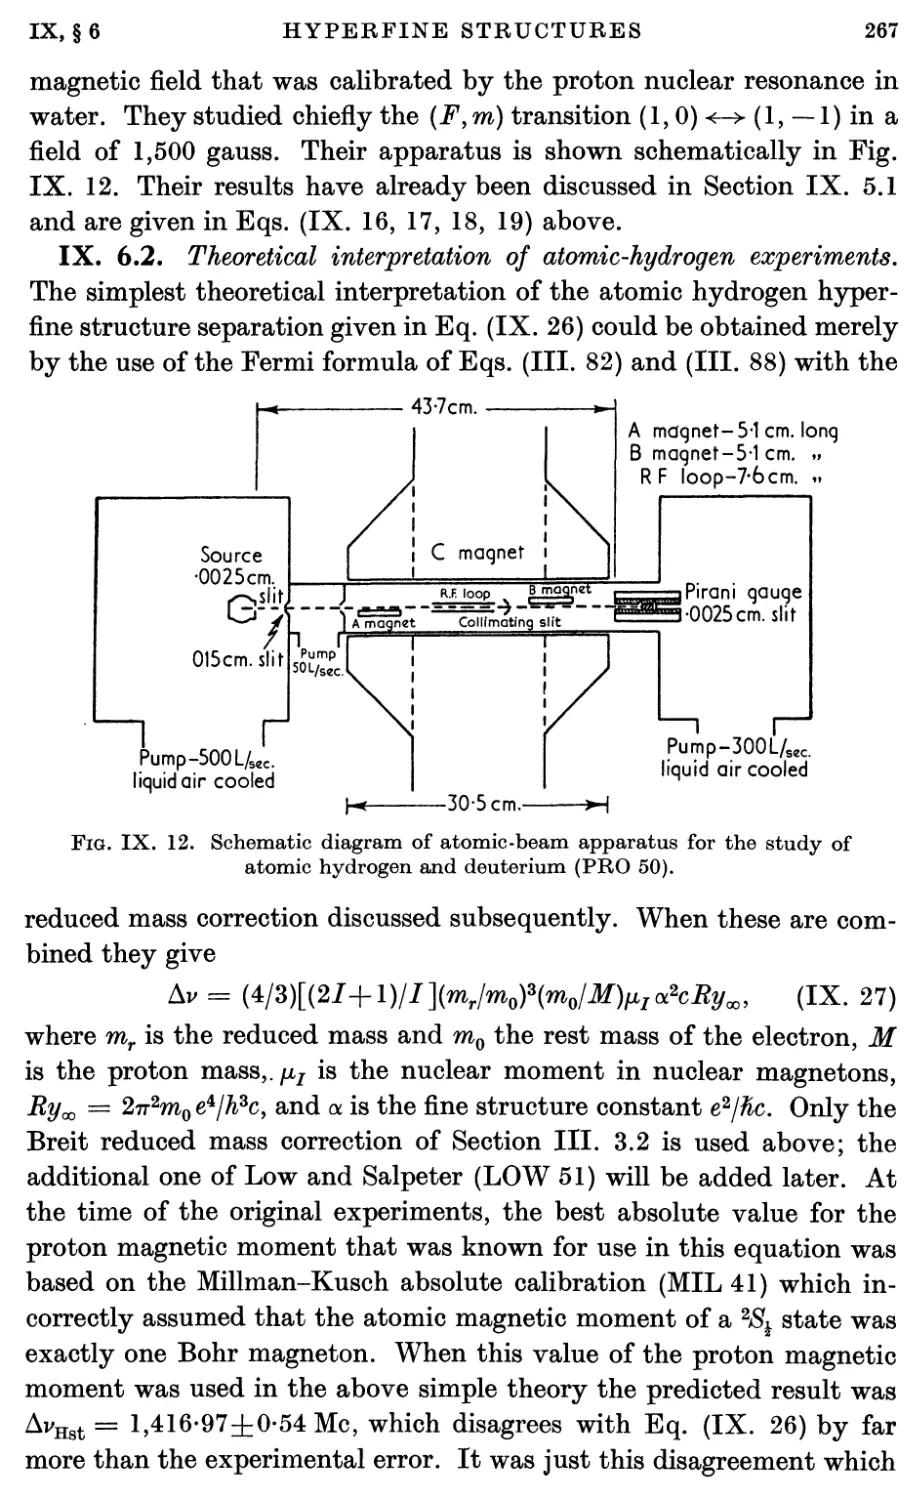 IX.6.2. Theoretical interpretation of atomic-hydrogen experiments